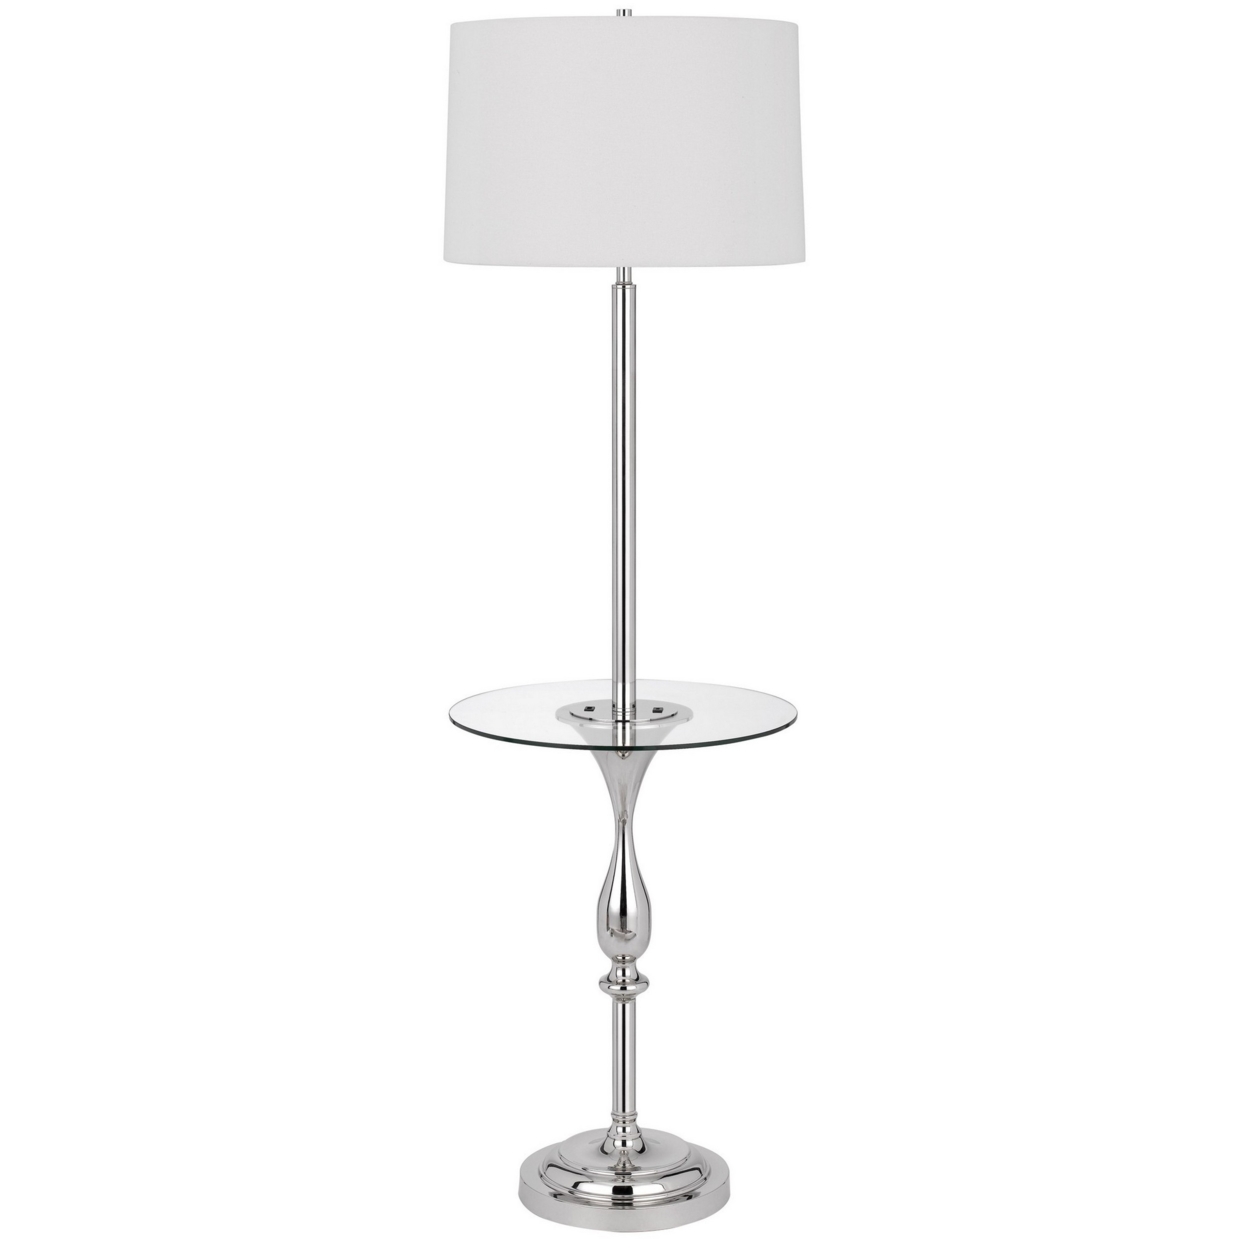 Ava 61 Inch Modern Floor Lamp, Glass Tray Table, 1 USB Port, Glossy, Chrome- Saltoro Sherpi